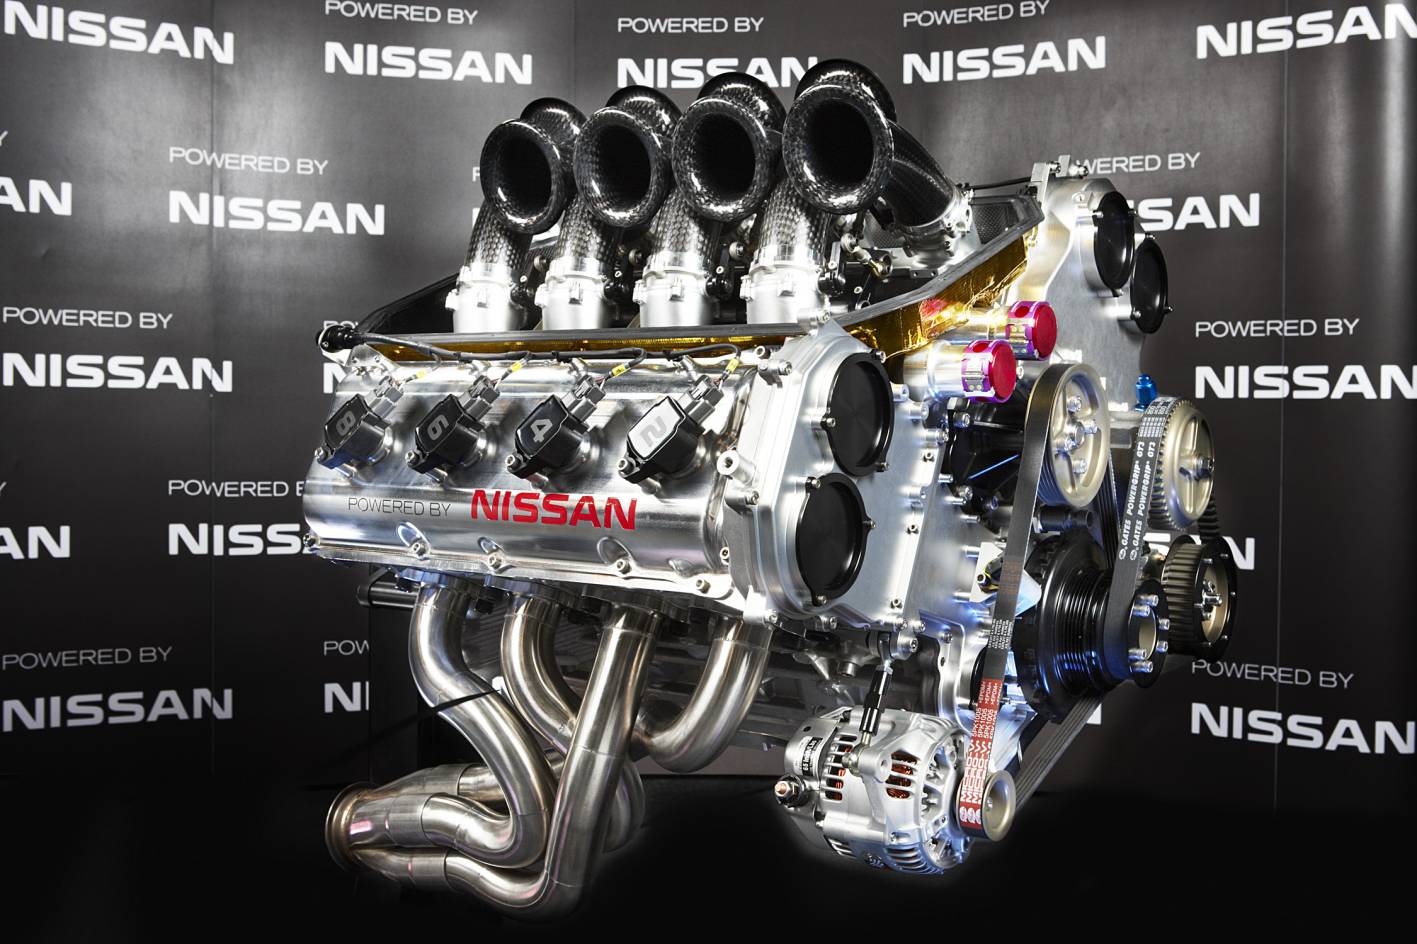 Nissan v8 supercar teams